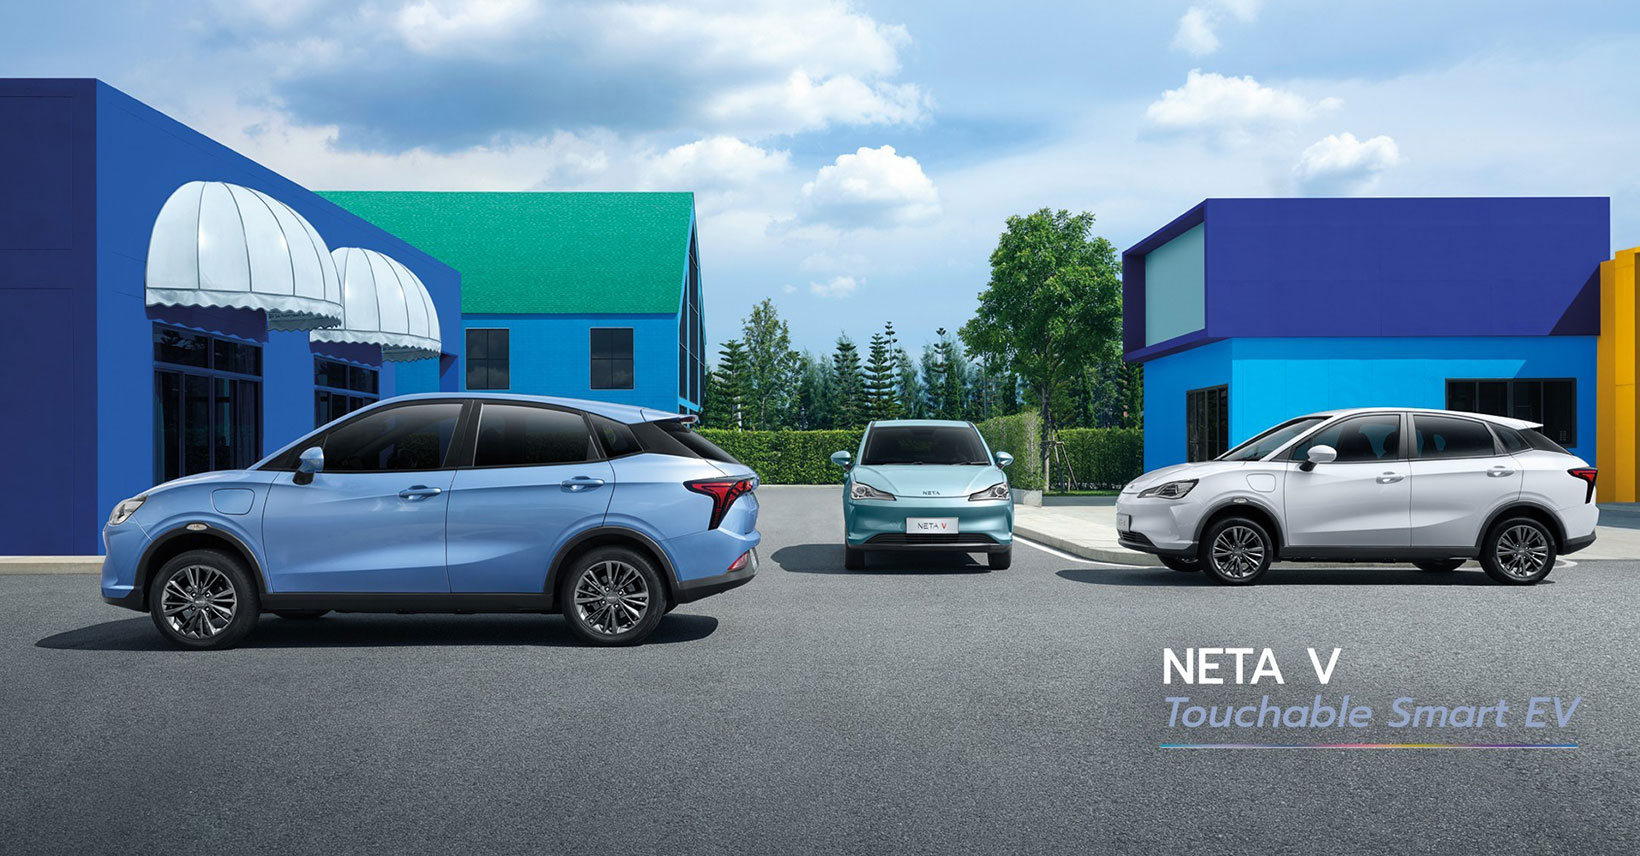 NETA V รถยนต์ไฟฟ้า 100% เปิดราคา 549,000 บาท